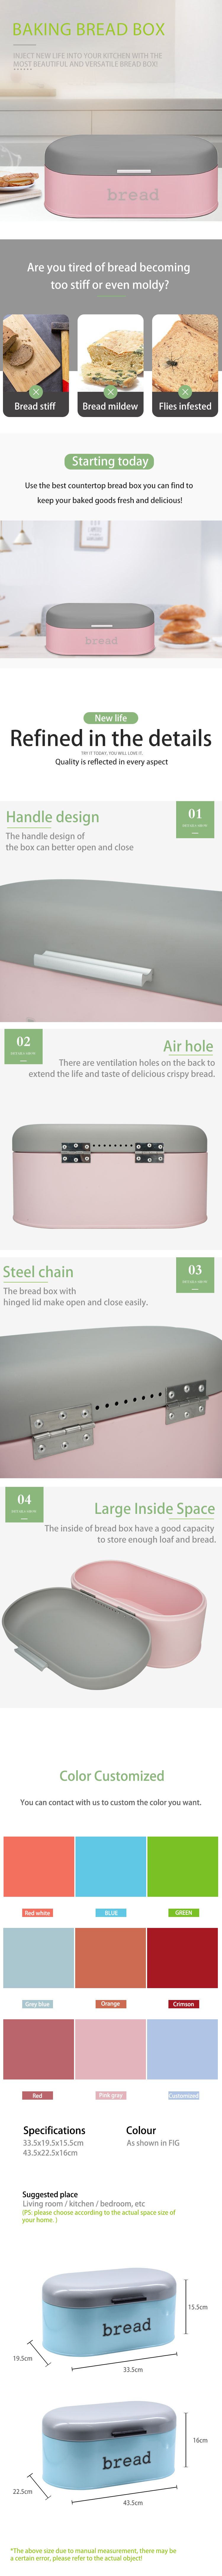 carbon steel bread box